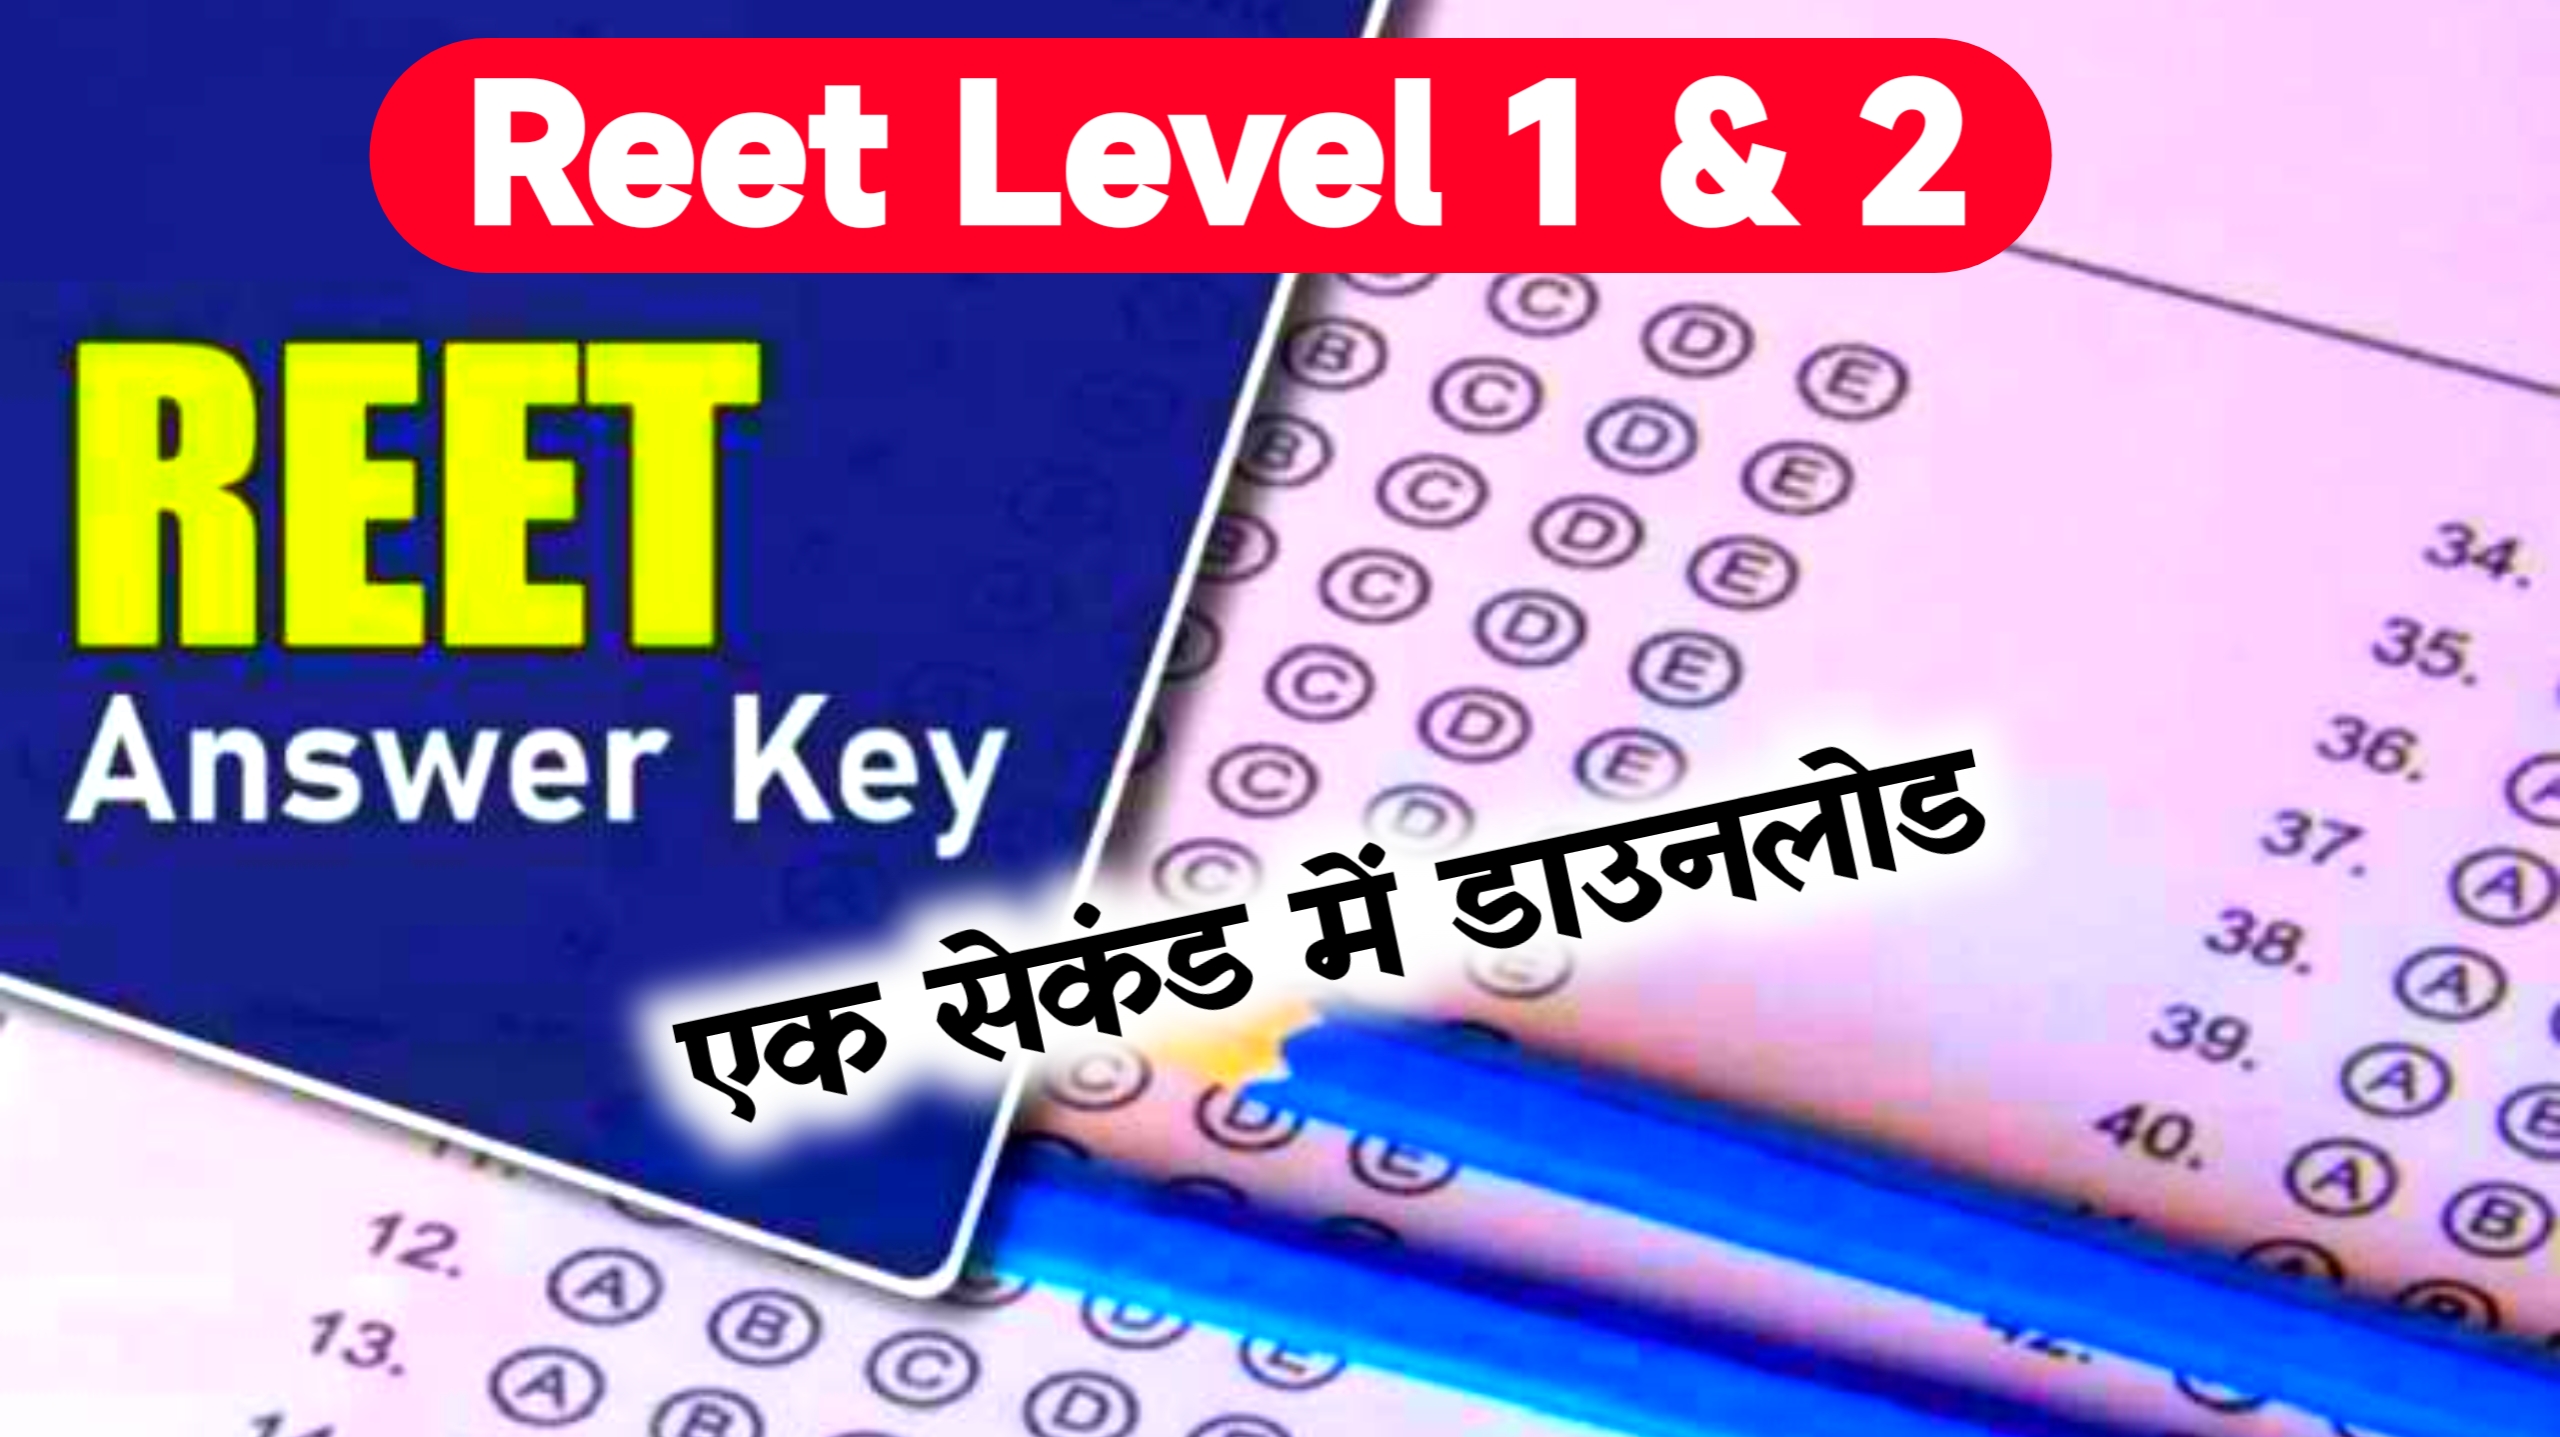 reetbser2022.in Reet Answer Key 2022 PDF Download ~ Reet Level 1, 2